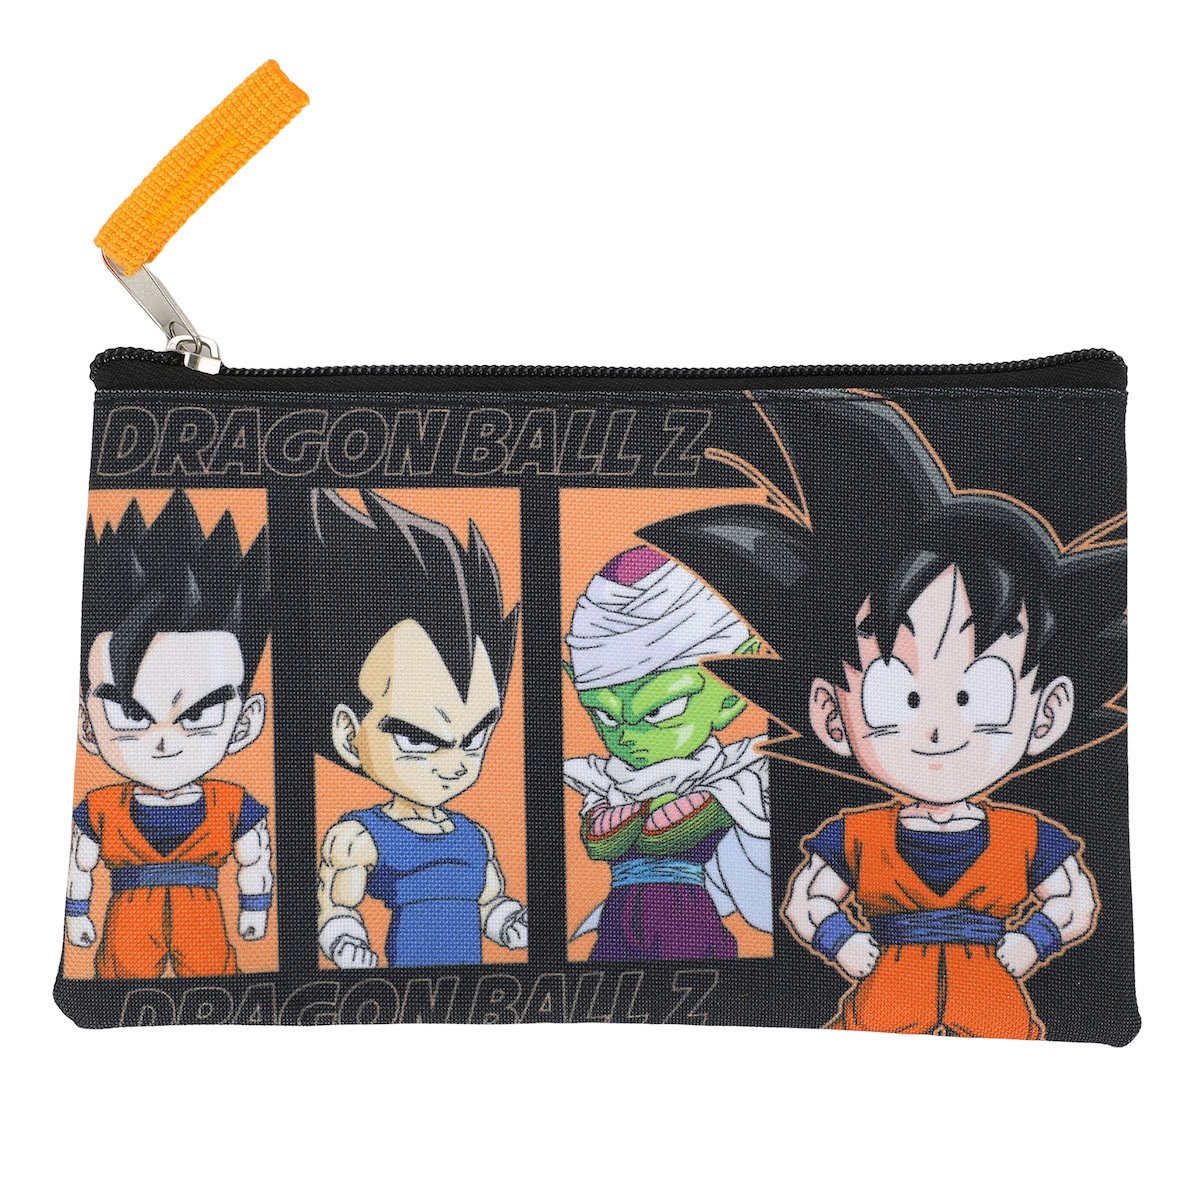 Dragon Ball Z Goku Style Backpack - Entertainment Earth